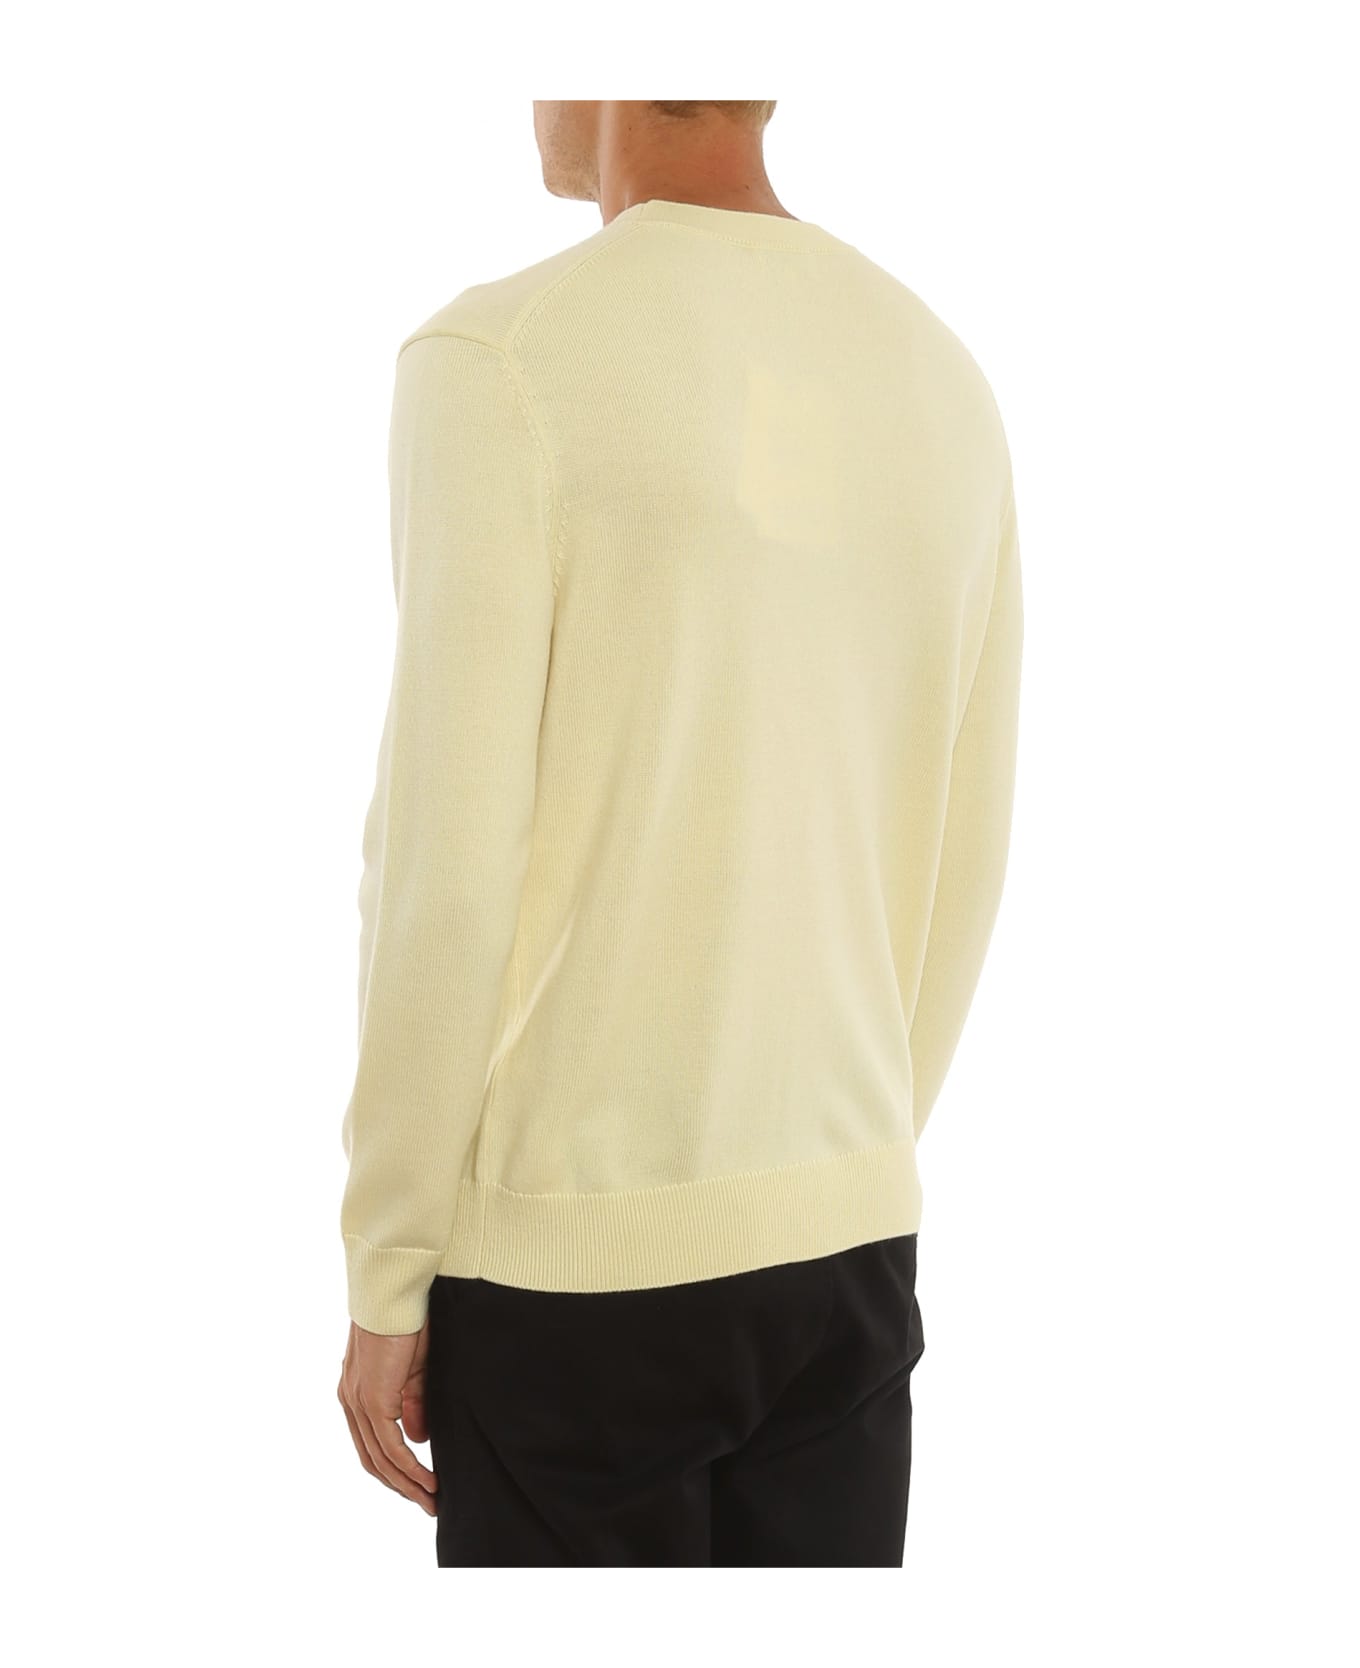 Kenzo Logo Wool Sweater - Yellow